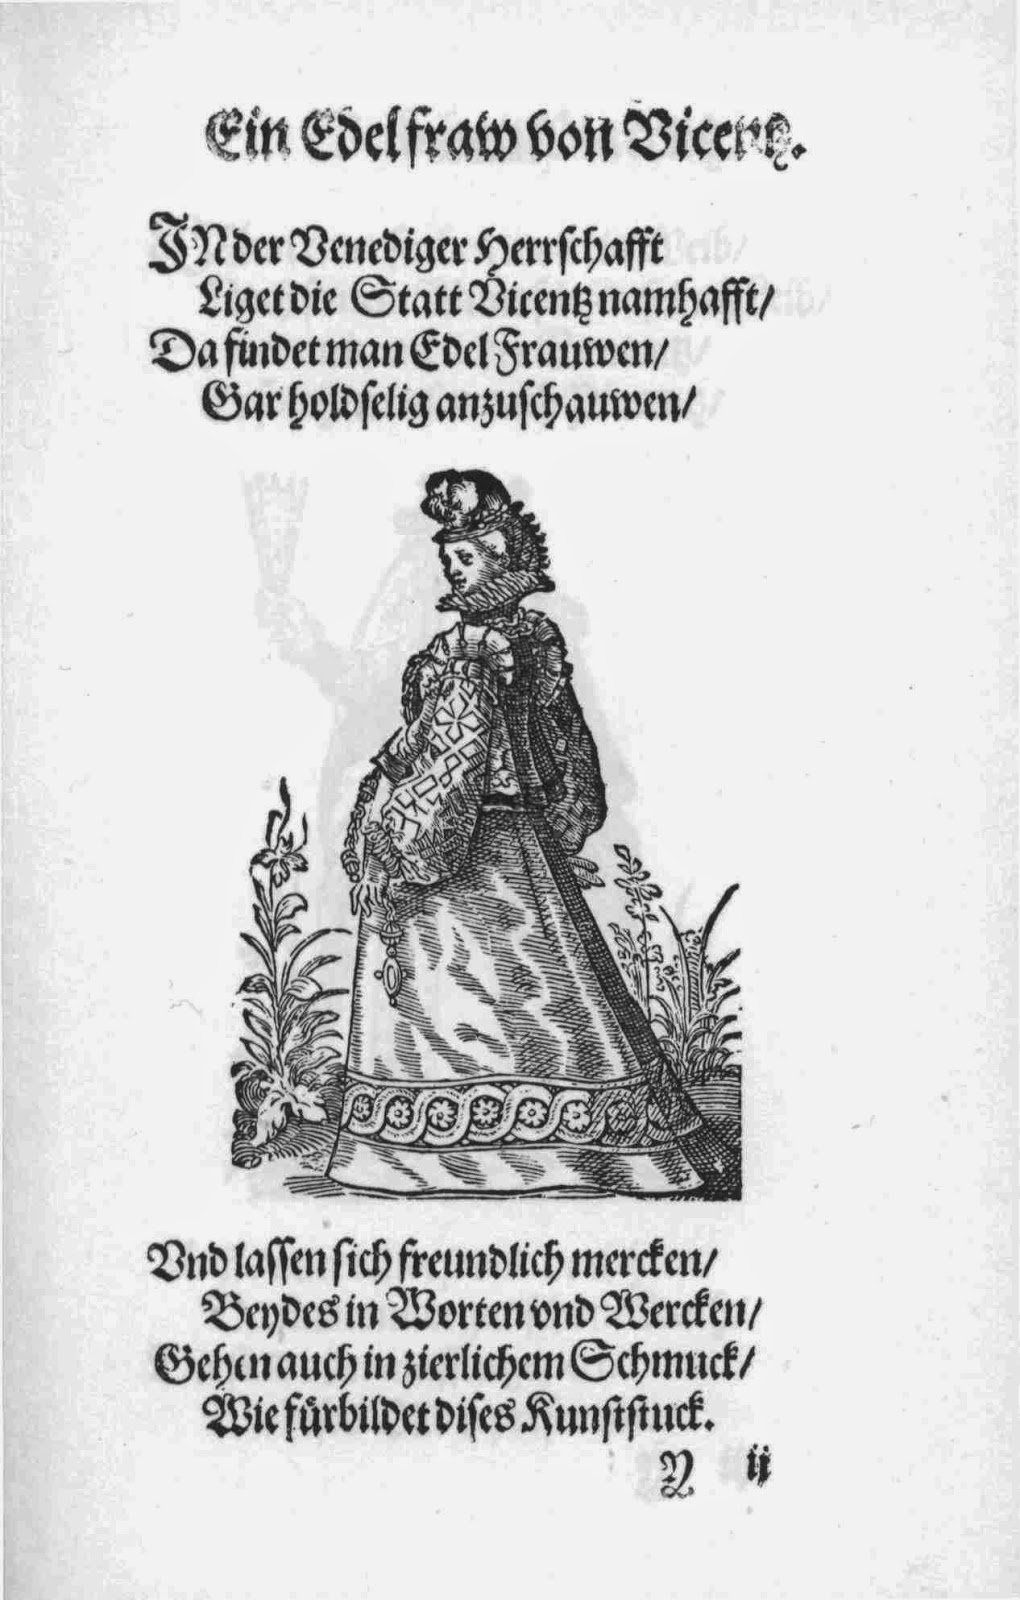 Eva's historical costuming blog: A 1570s Swedish woman's costume